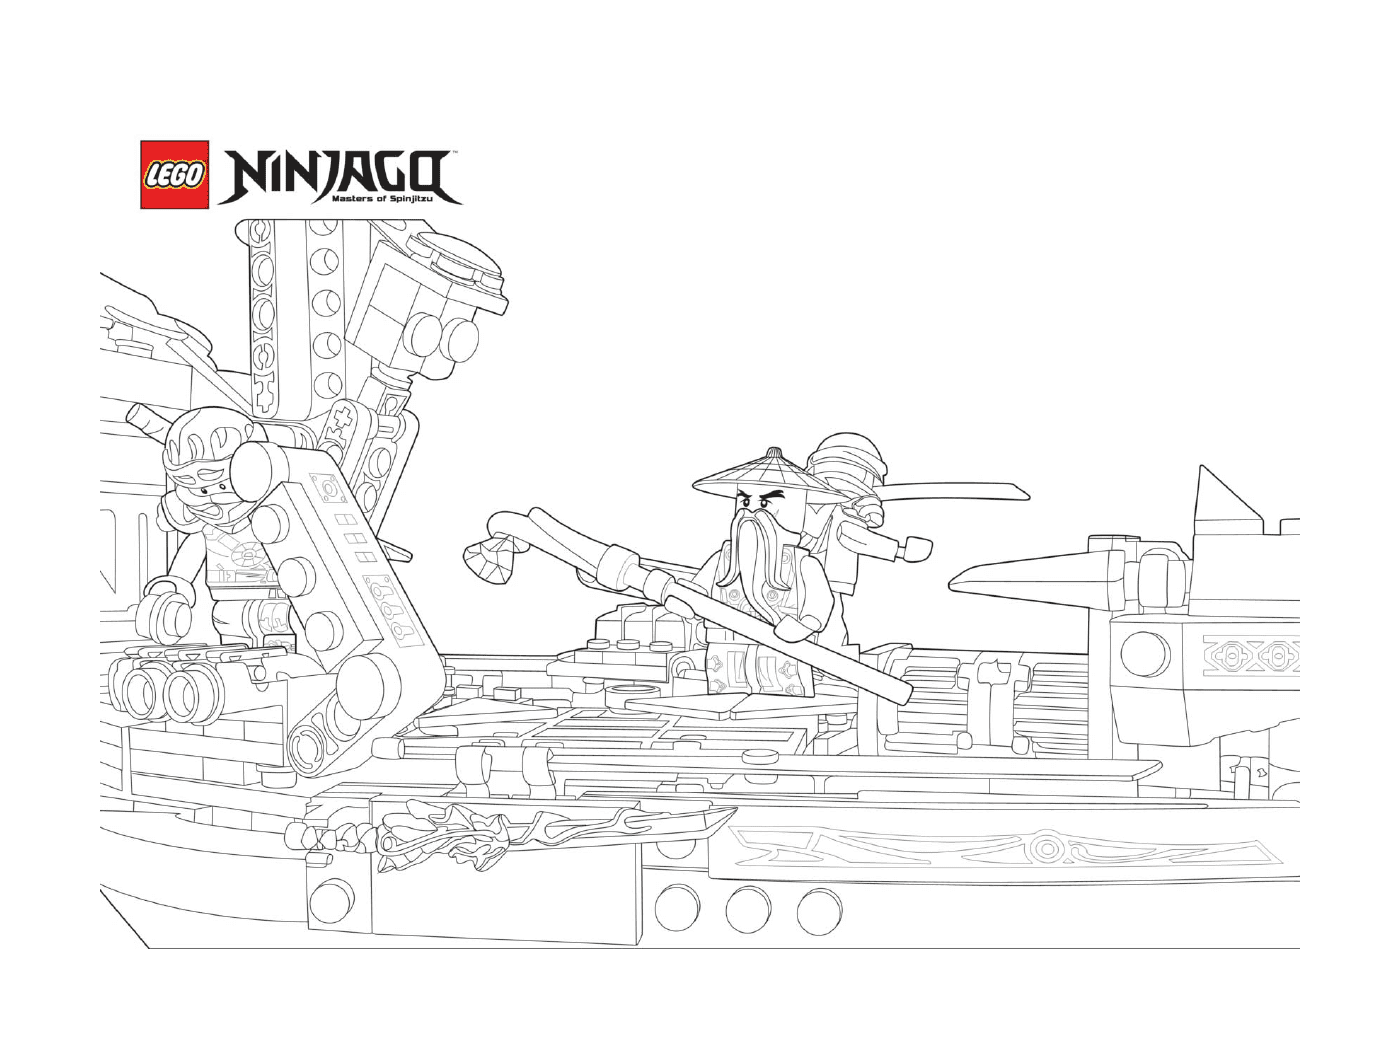  Ninjago boat with sensei wu 